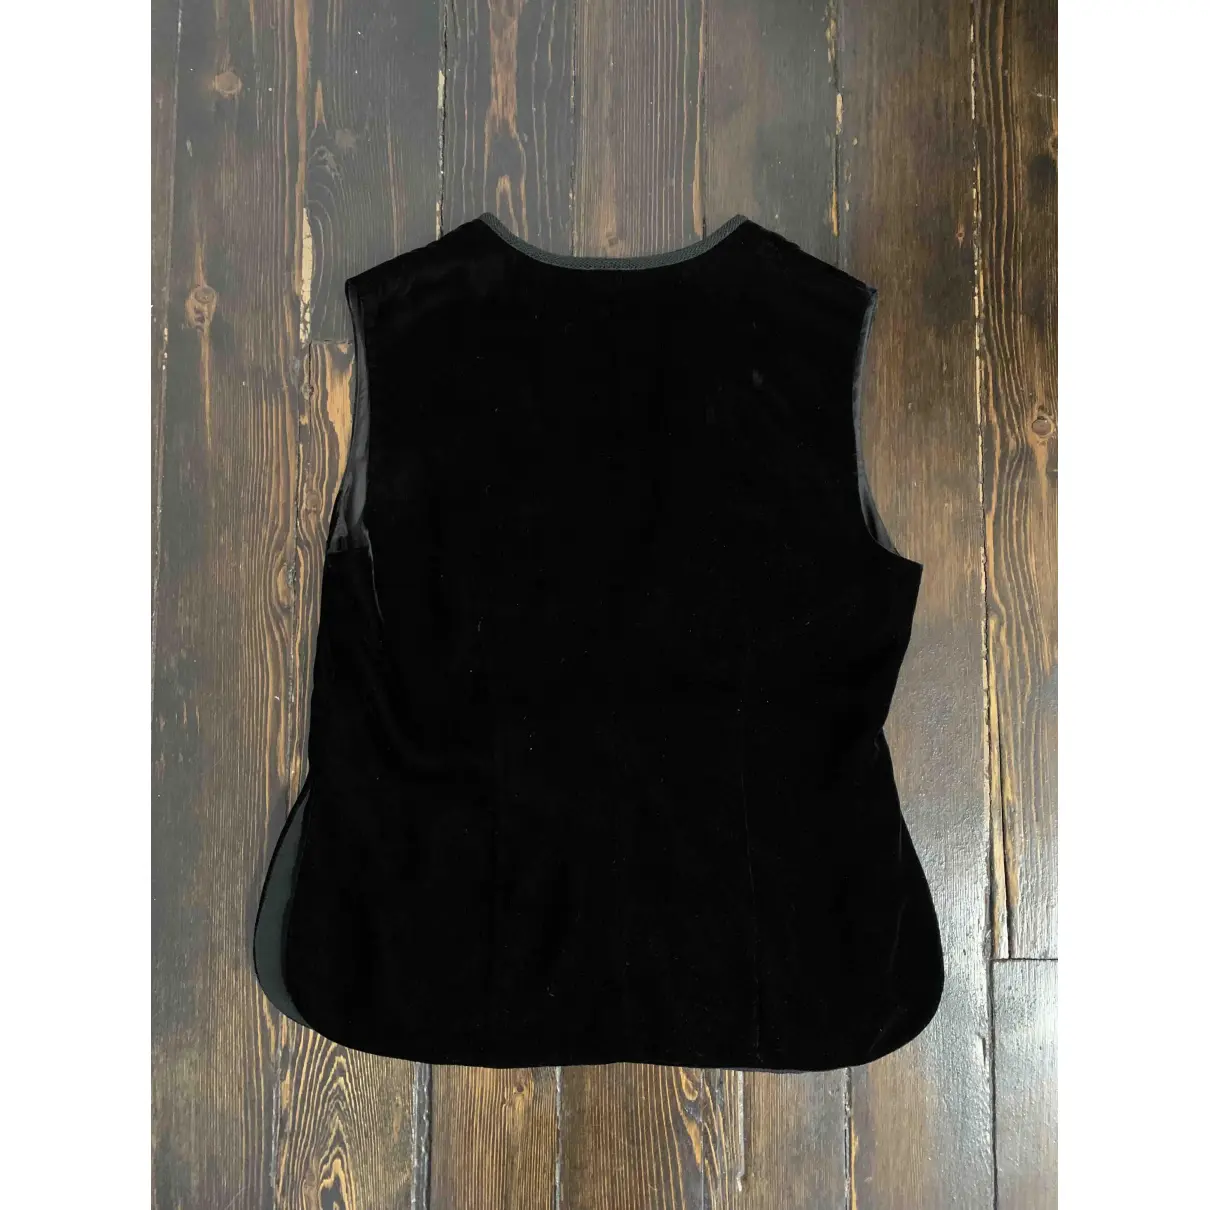 Buy Giorgio Armani Velvet vest online